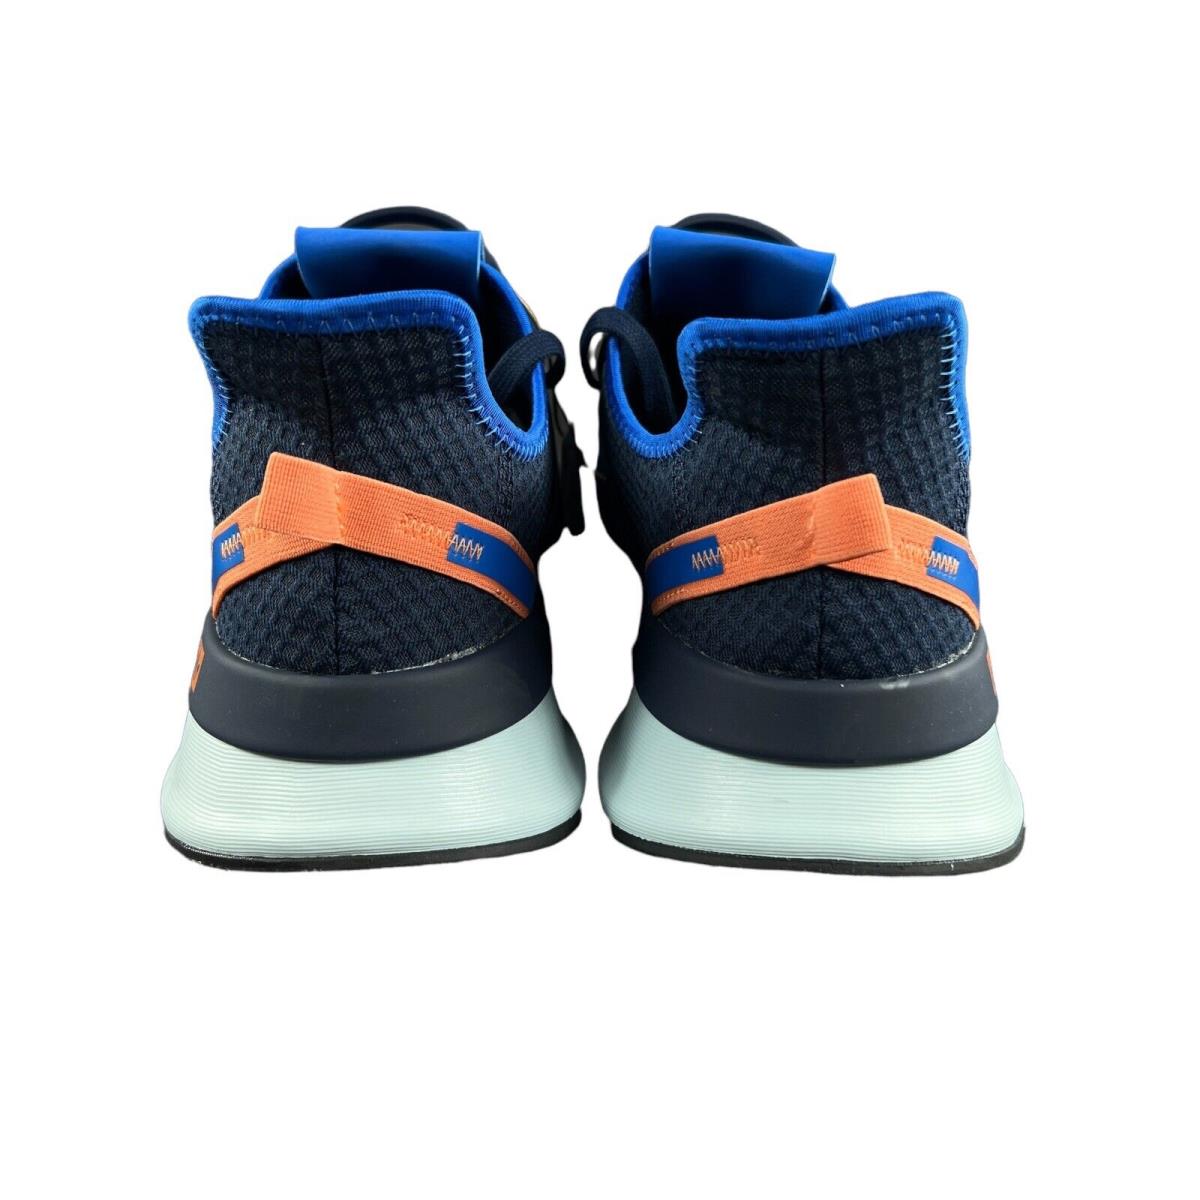 Adidas Men`s U_path Run Navy Blue Black Shoes FV9254 Sizes 9 - 13 - Blue